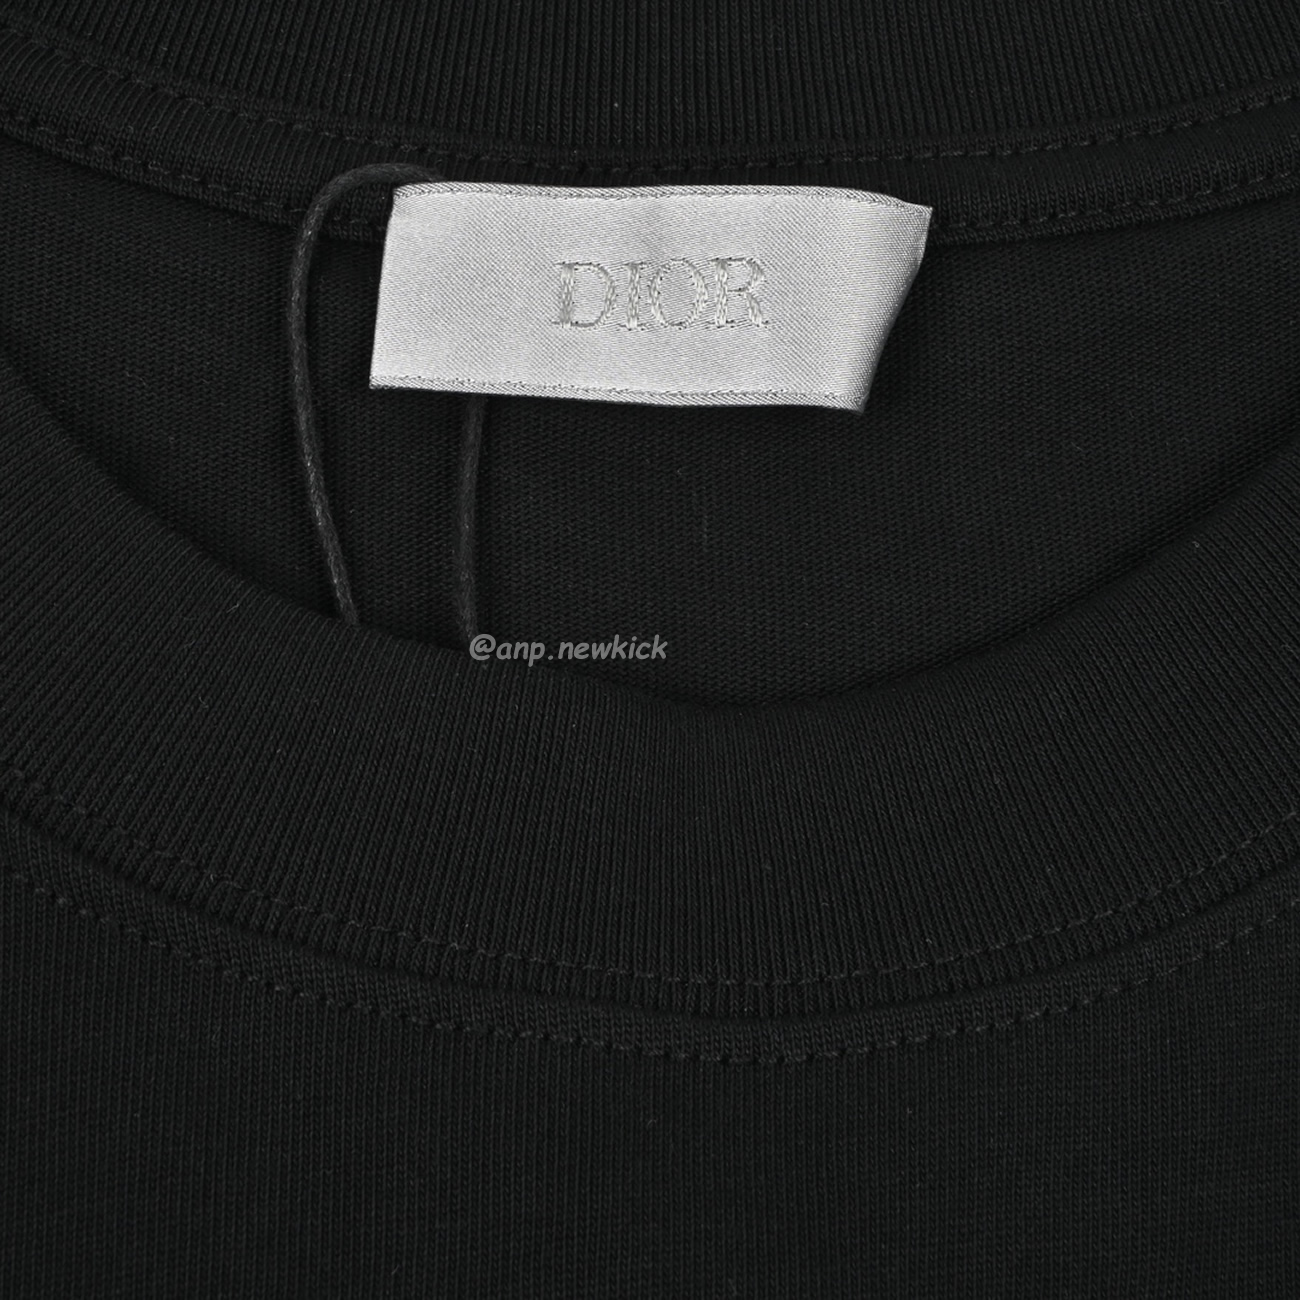 Dior Hand Drawn Sketch Logo Graffiti Short Sleeved T Shirt (8) - newkick.org